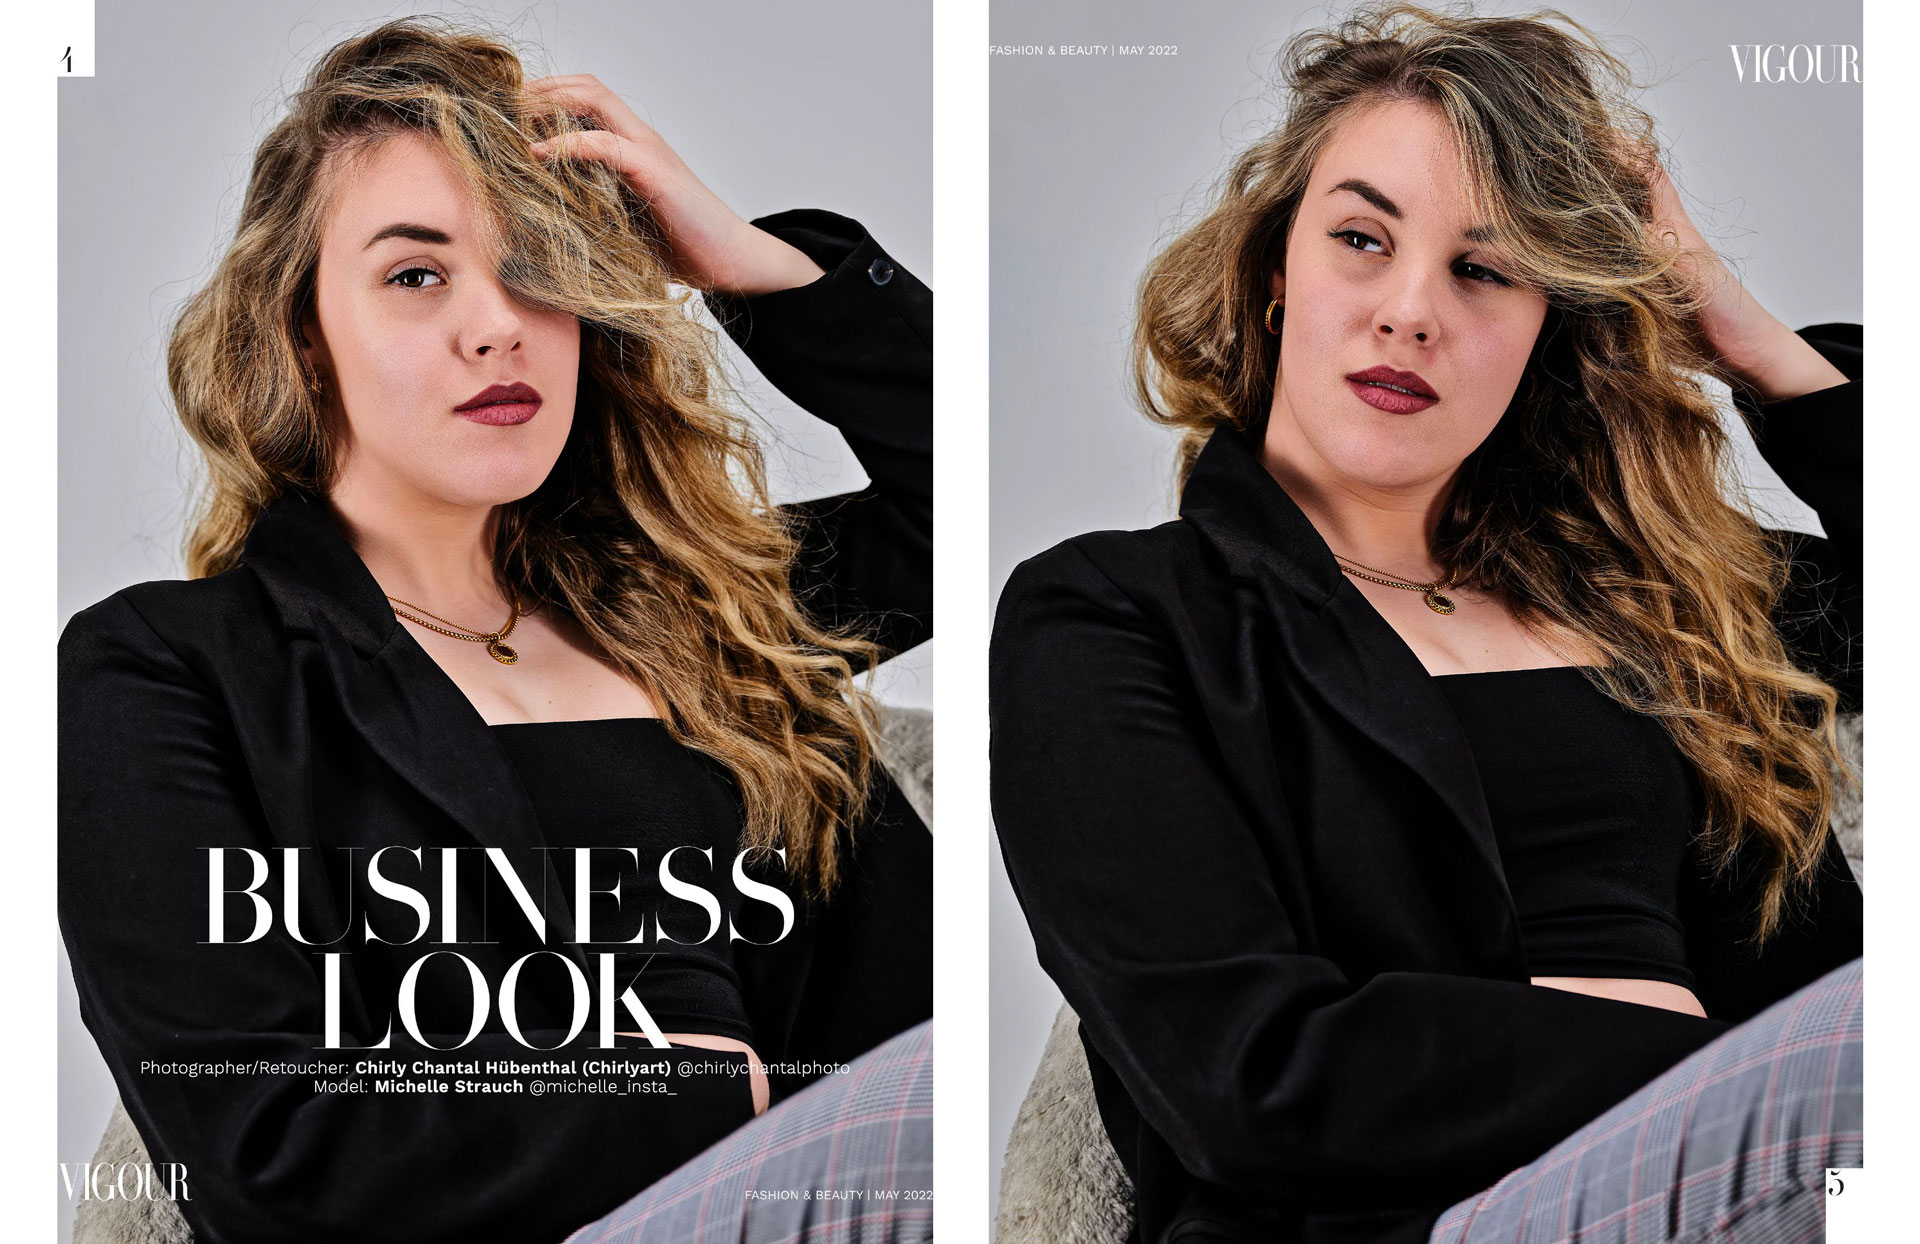 Vigour Magazine Business Look